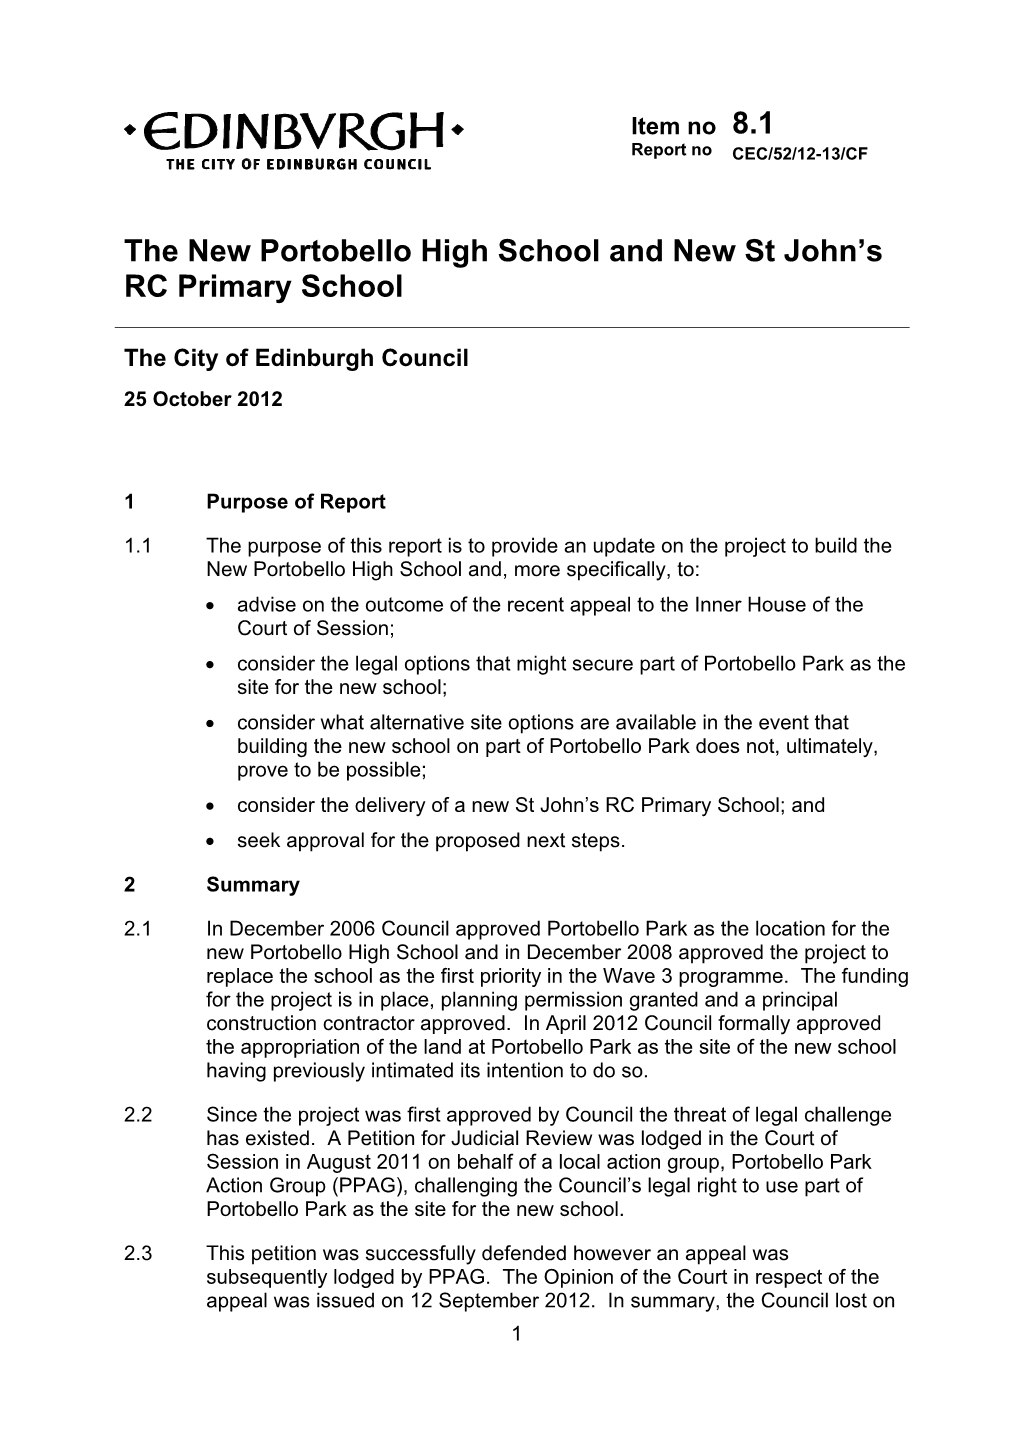 The New Portobello High School and New St John's RC Primary School